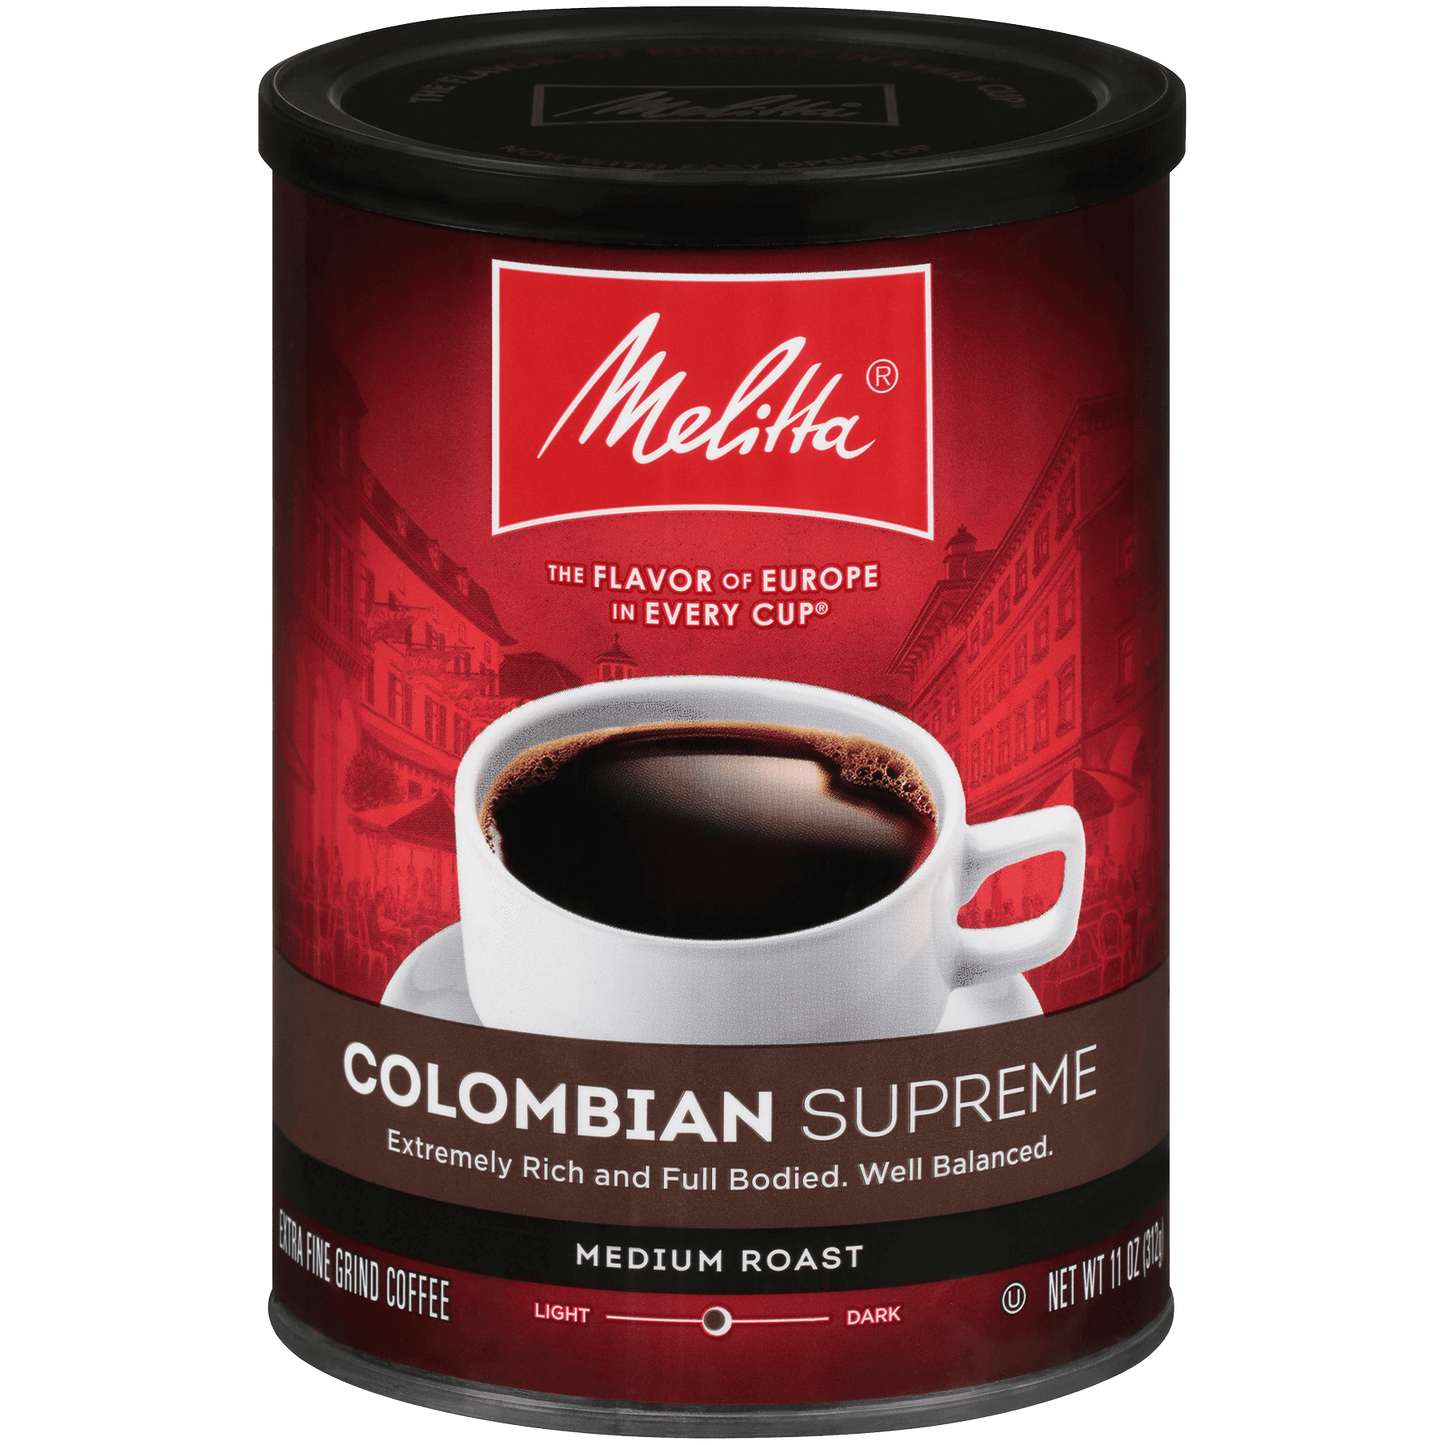 Colombian Supreme Coffee - 11oz